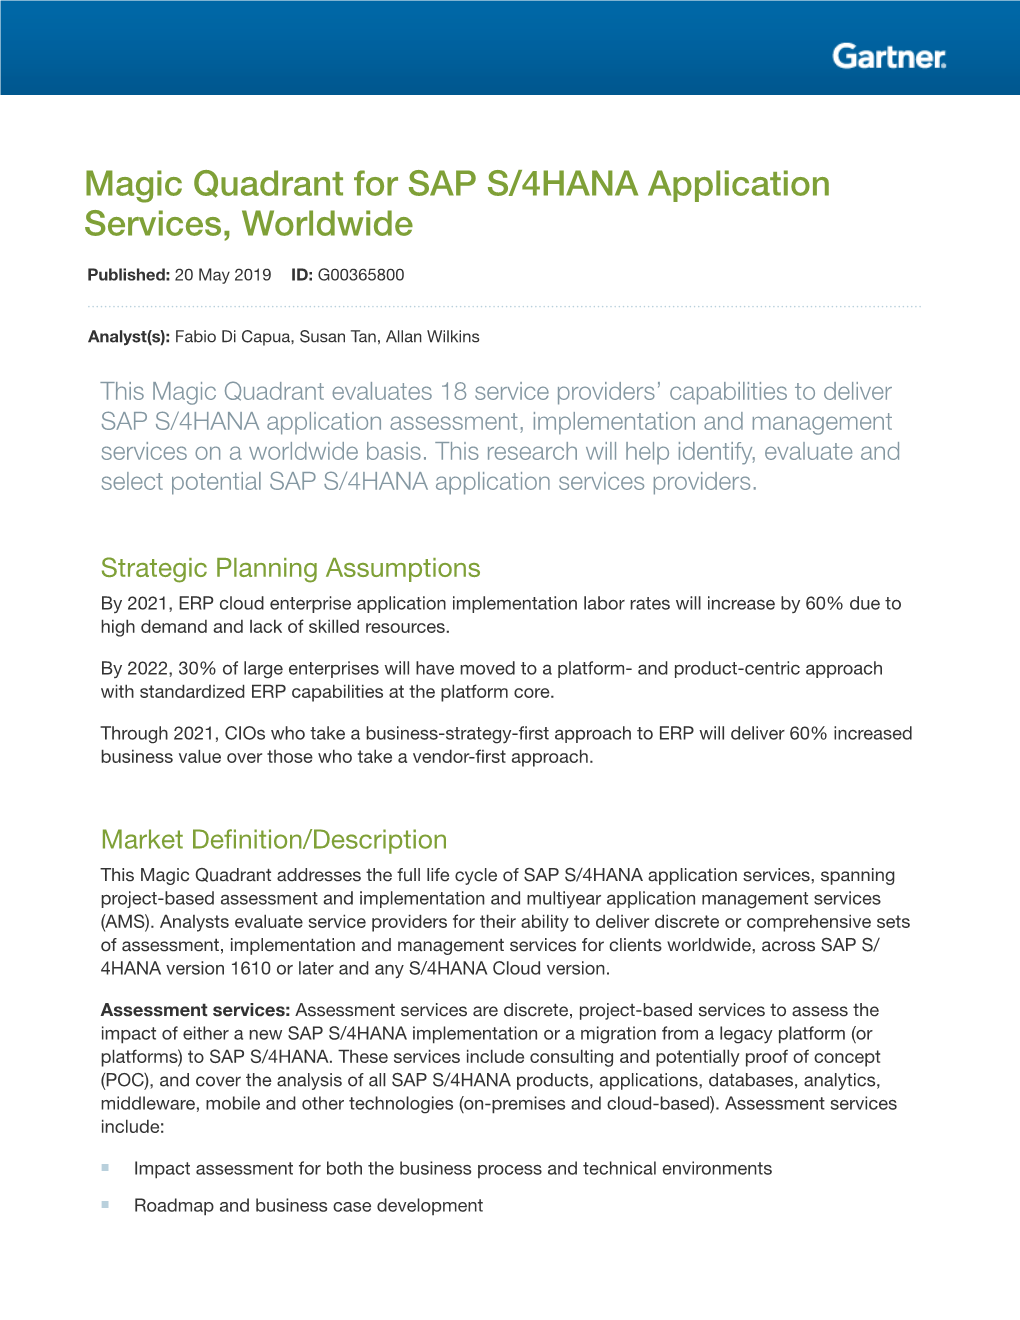 Magic Quadrant for SAP S/4HANA Application Services, Worldwide